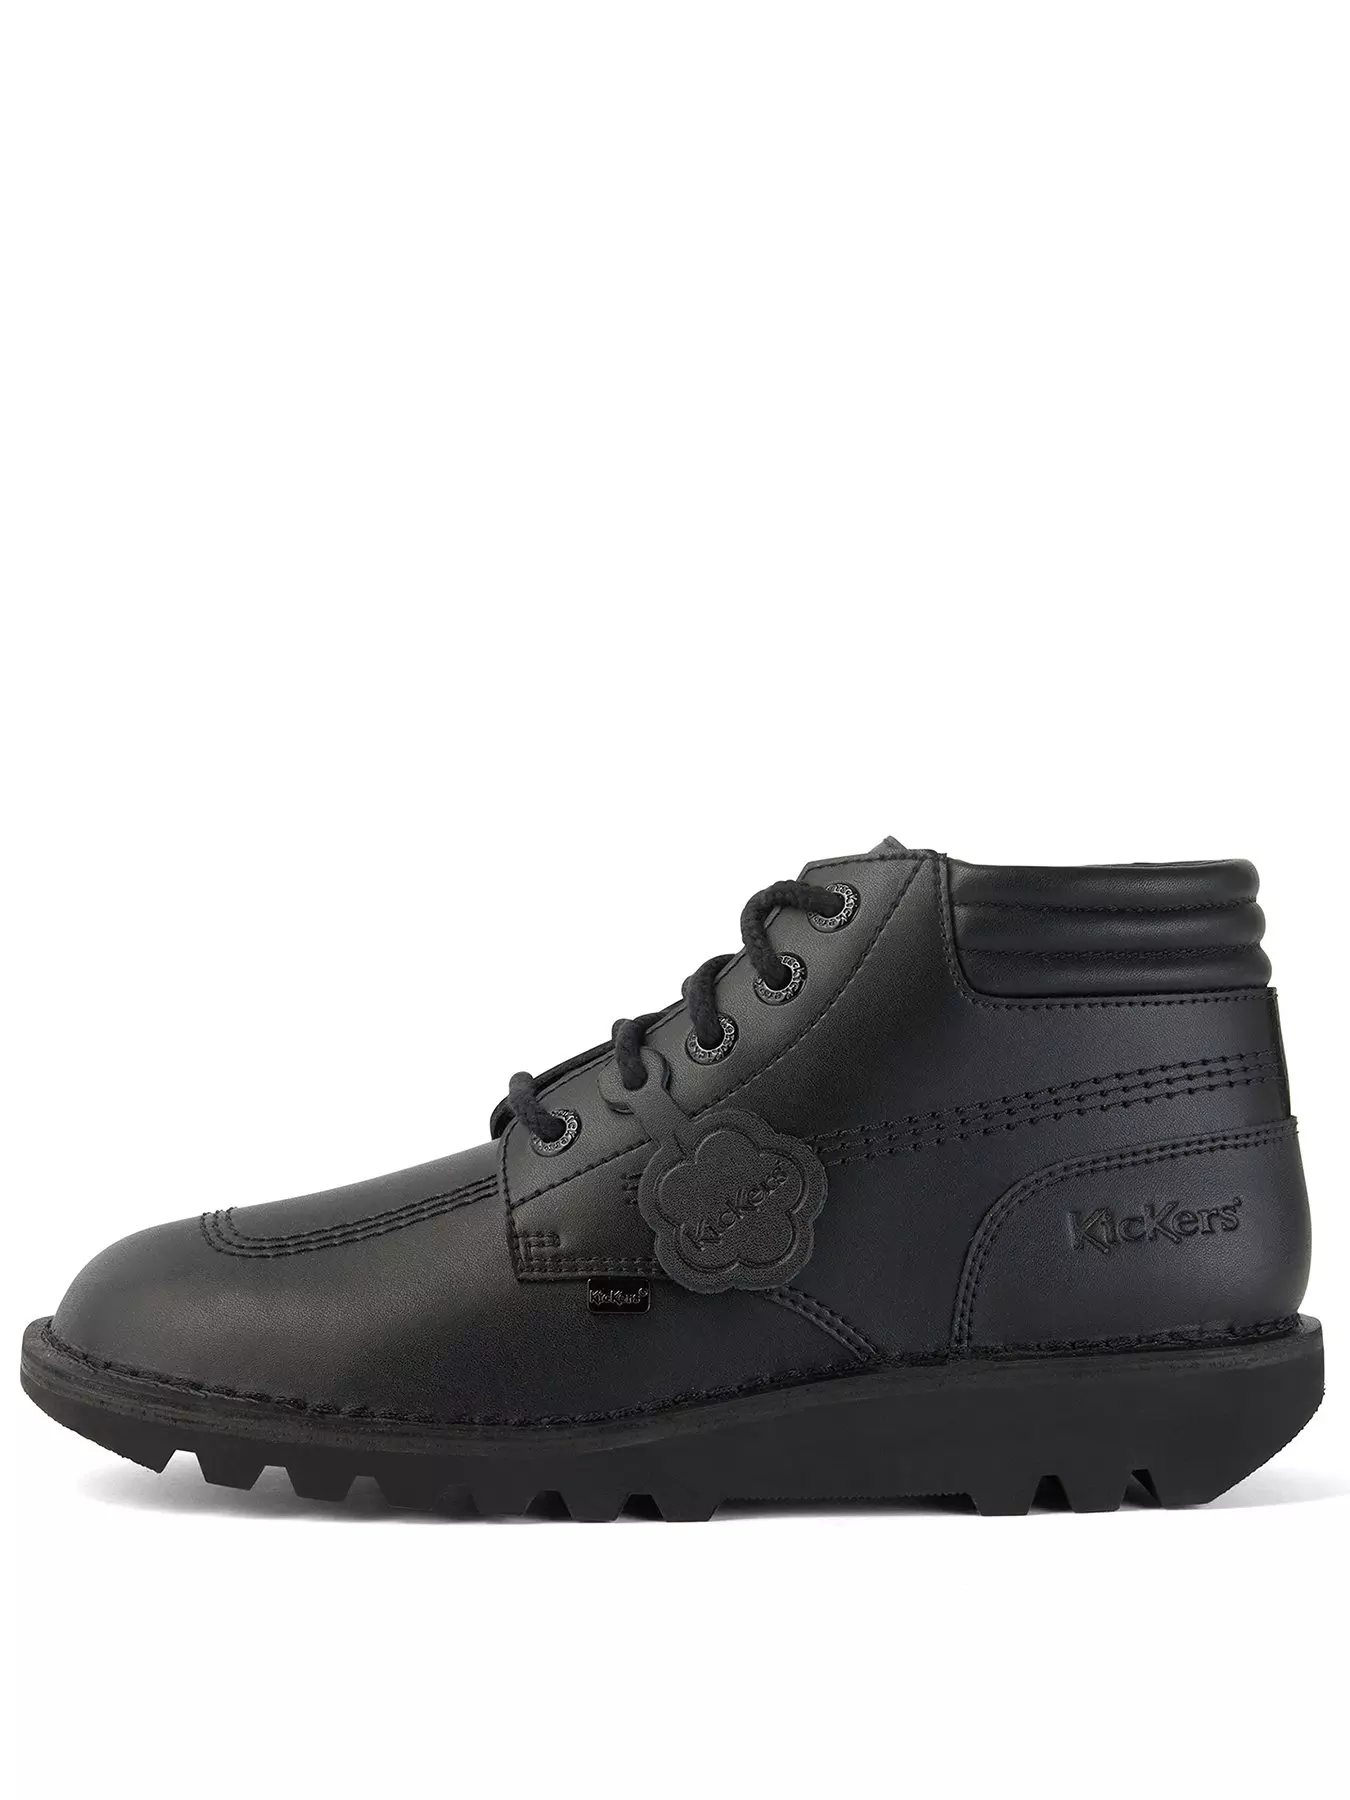 Kickers Kick Hi Leather Ankle Boots - Black